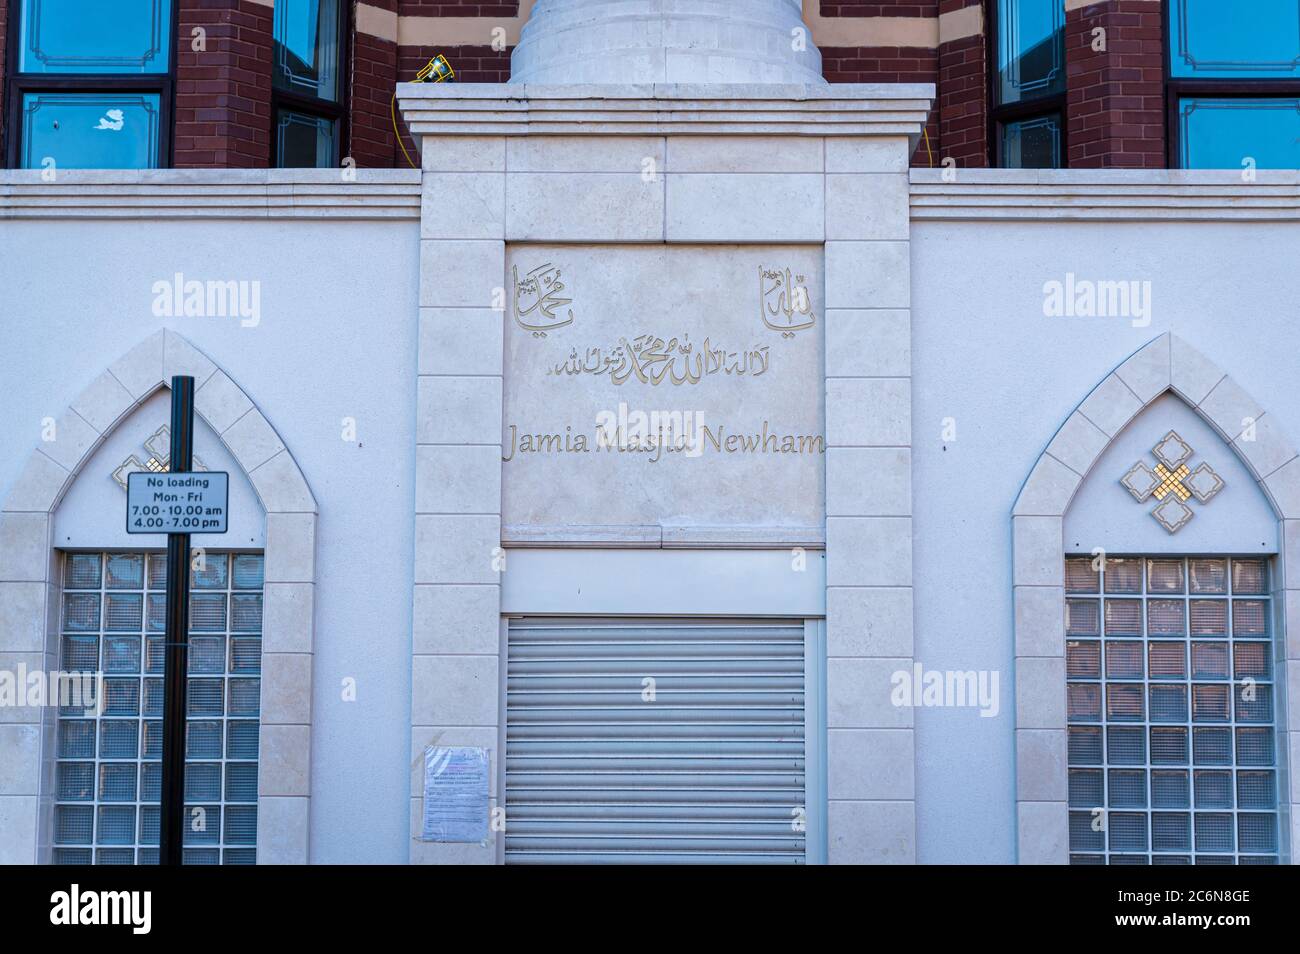 Mosquée Markazi Jamia, East Ham, Londres Banque D'Images